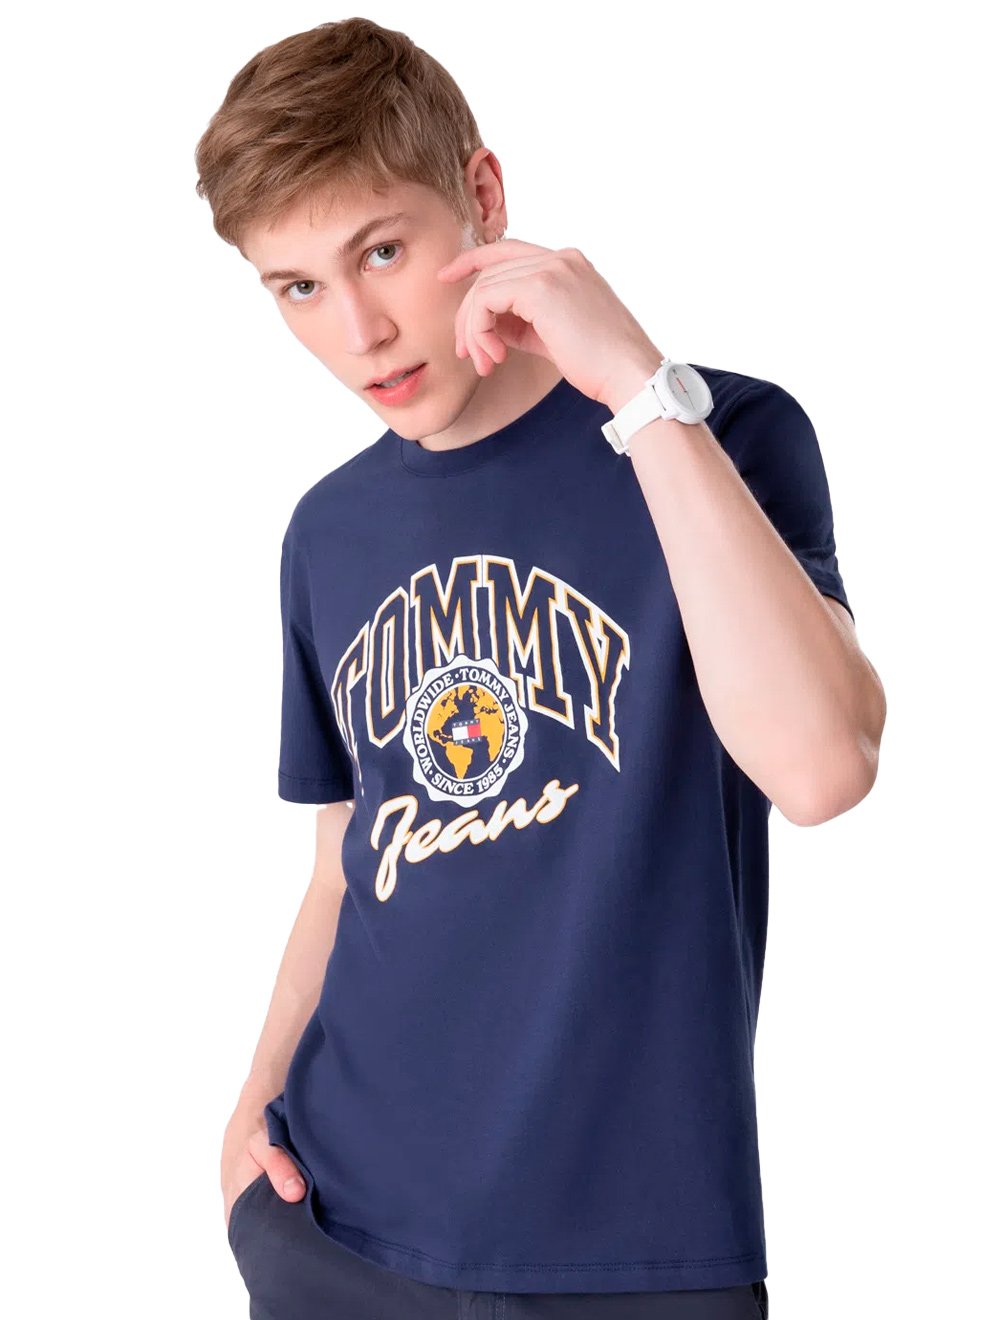 Camiseta Tommy Jeans Masculina Azul Marinho College Color - Loja Battisti